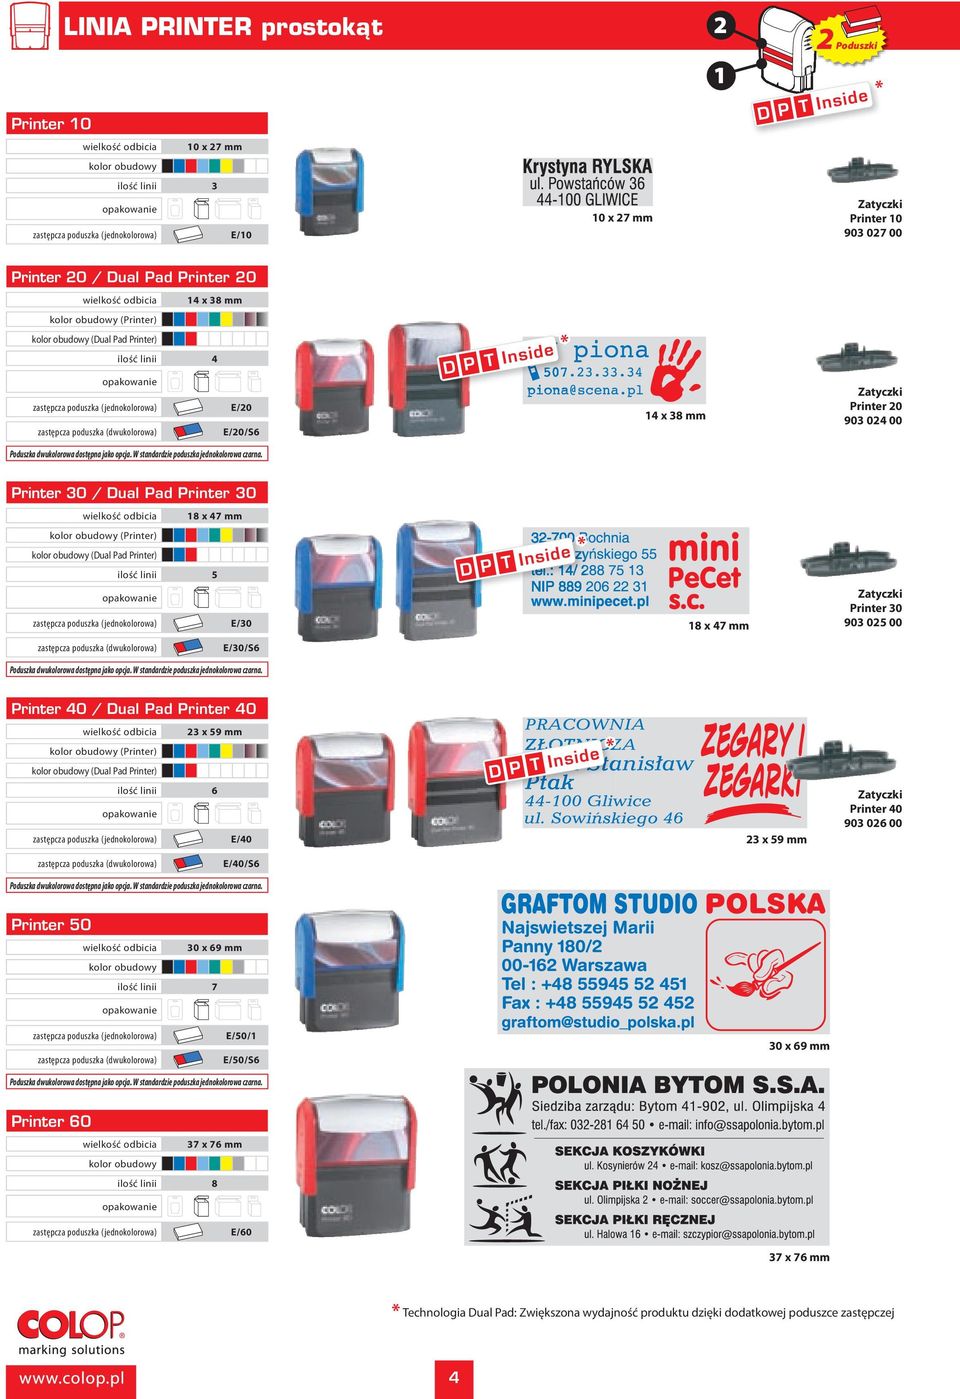 Zatyczki Printer 30 903 025 00 E/30/S6 Printer 40 / Dual Pad Printer 40 23 x 59 mm (Printer) (Dual Pad Printer) ilość linii 6 E/40 * 23 x 59 mm Zatyczki Printer 40 903 026 00 E/40/S6 Printer